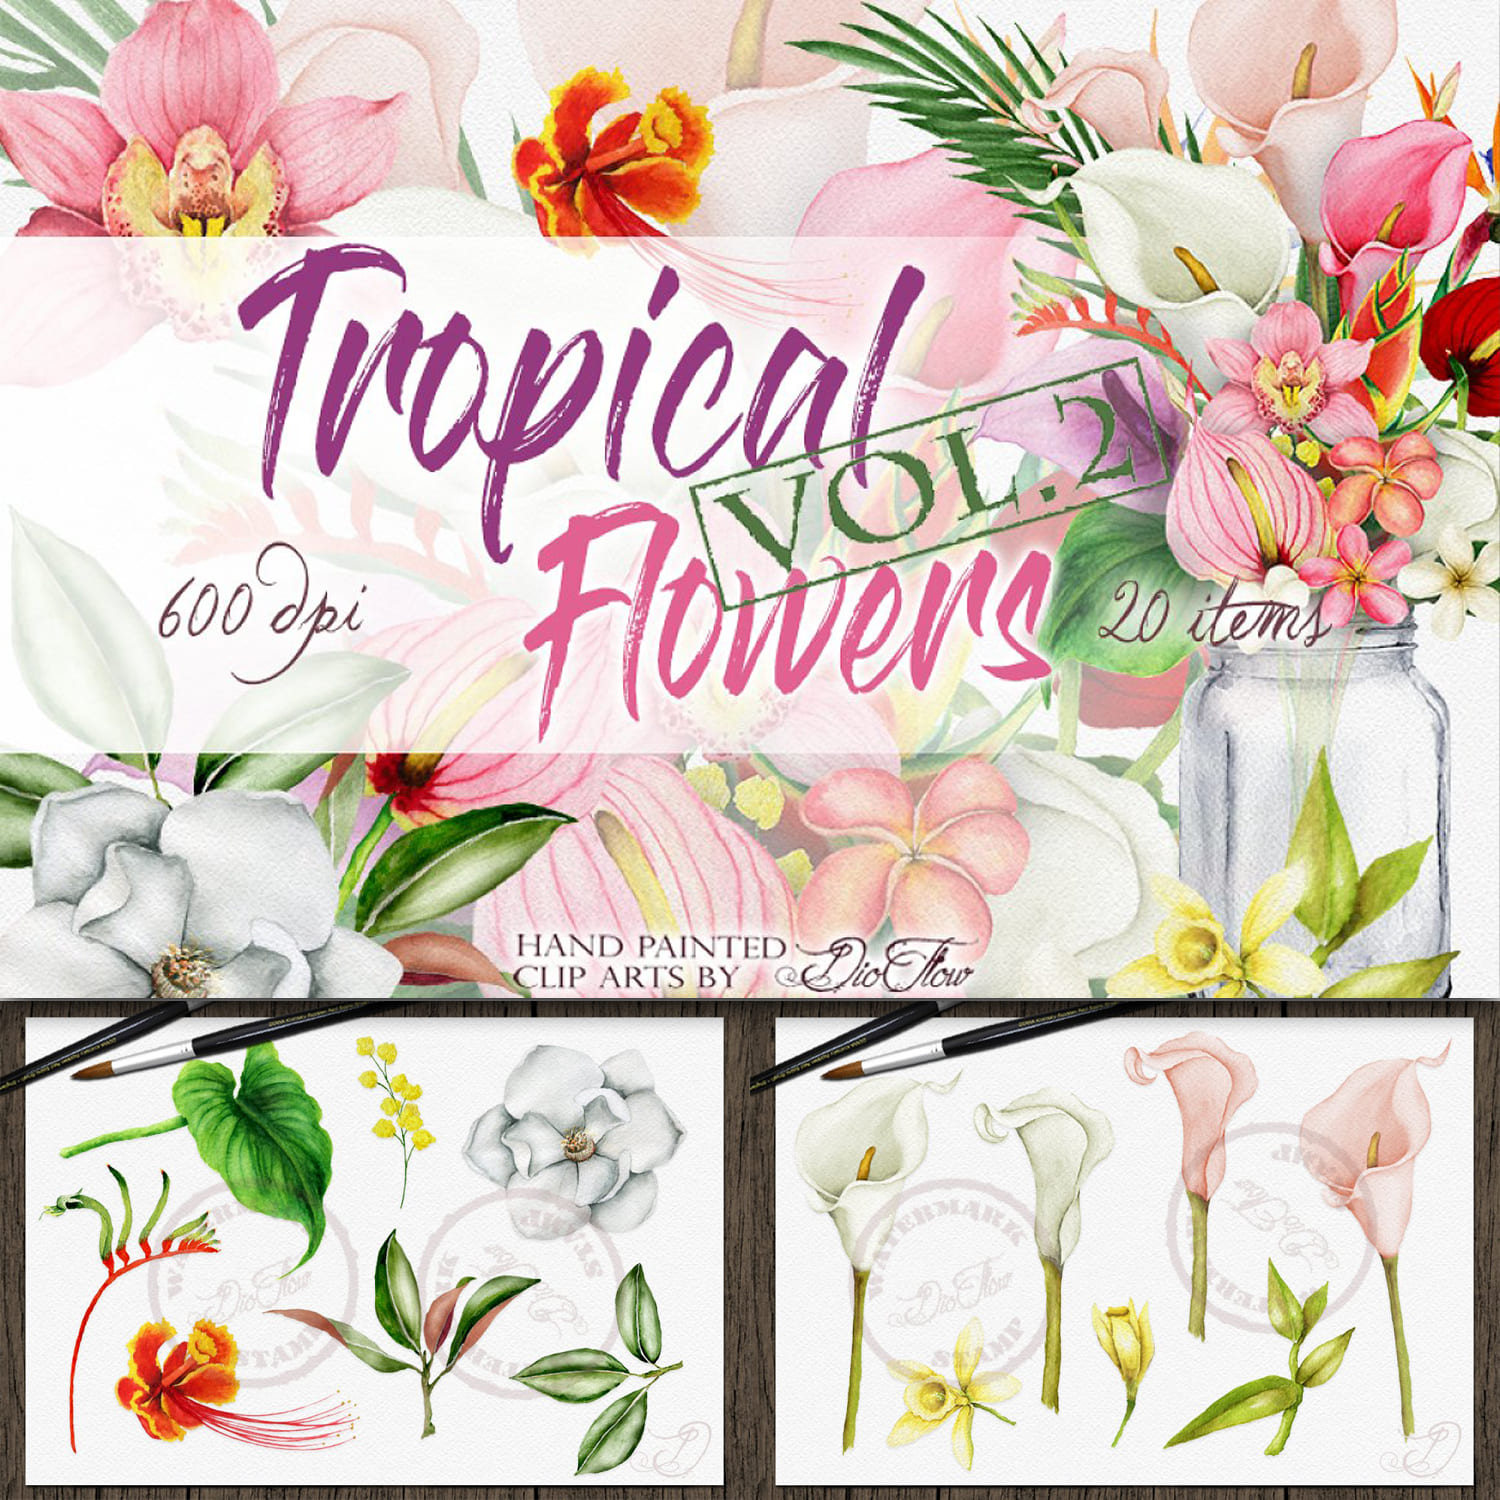 Tropical Flowers Vol. 2 Illustration.